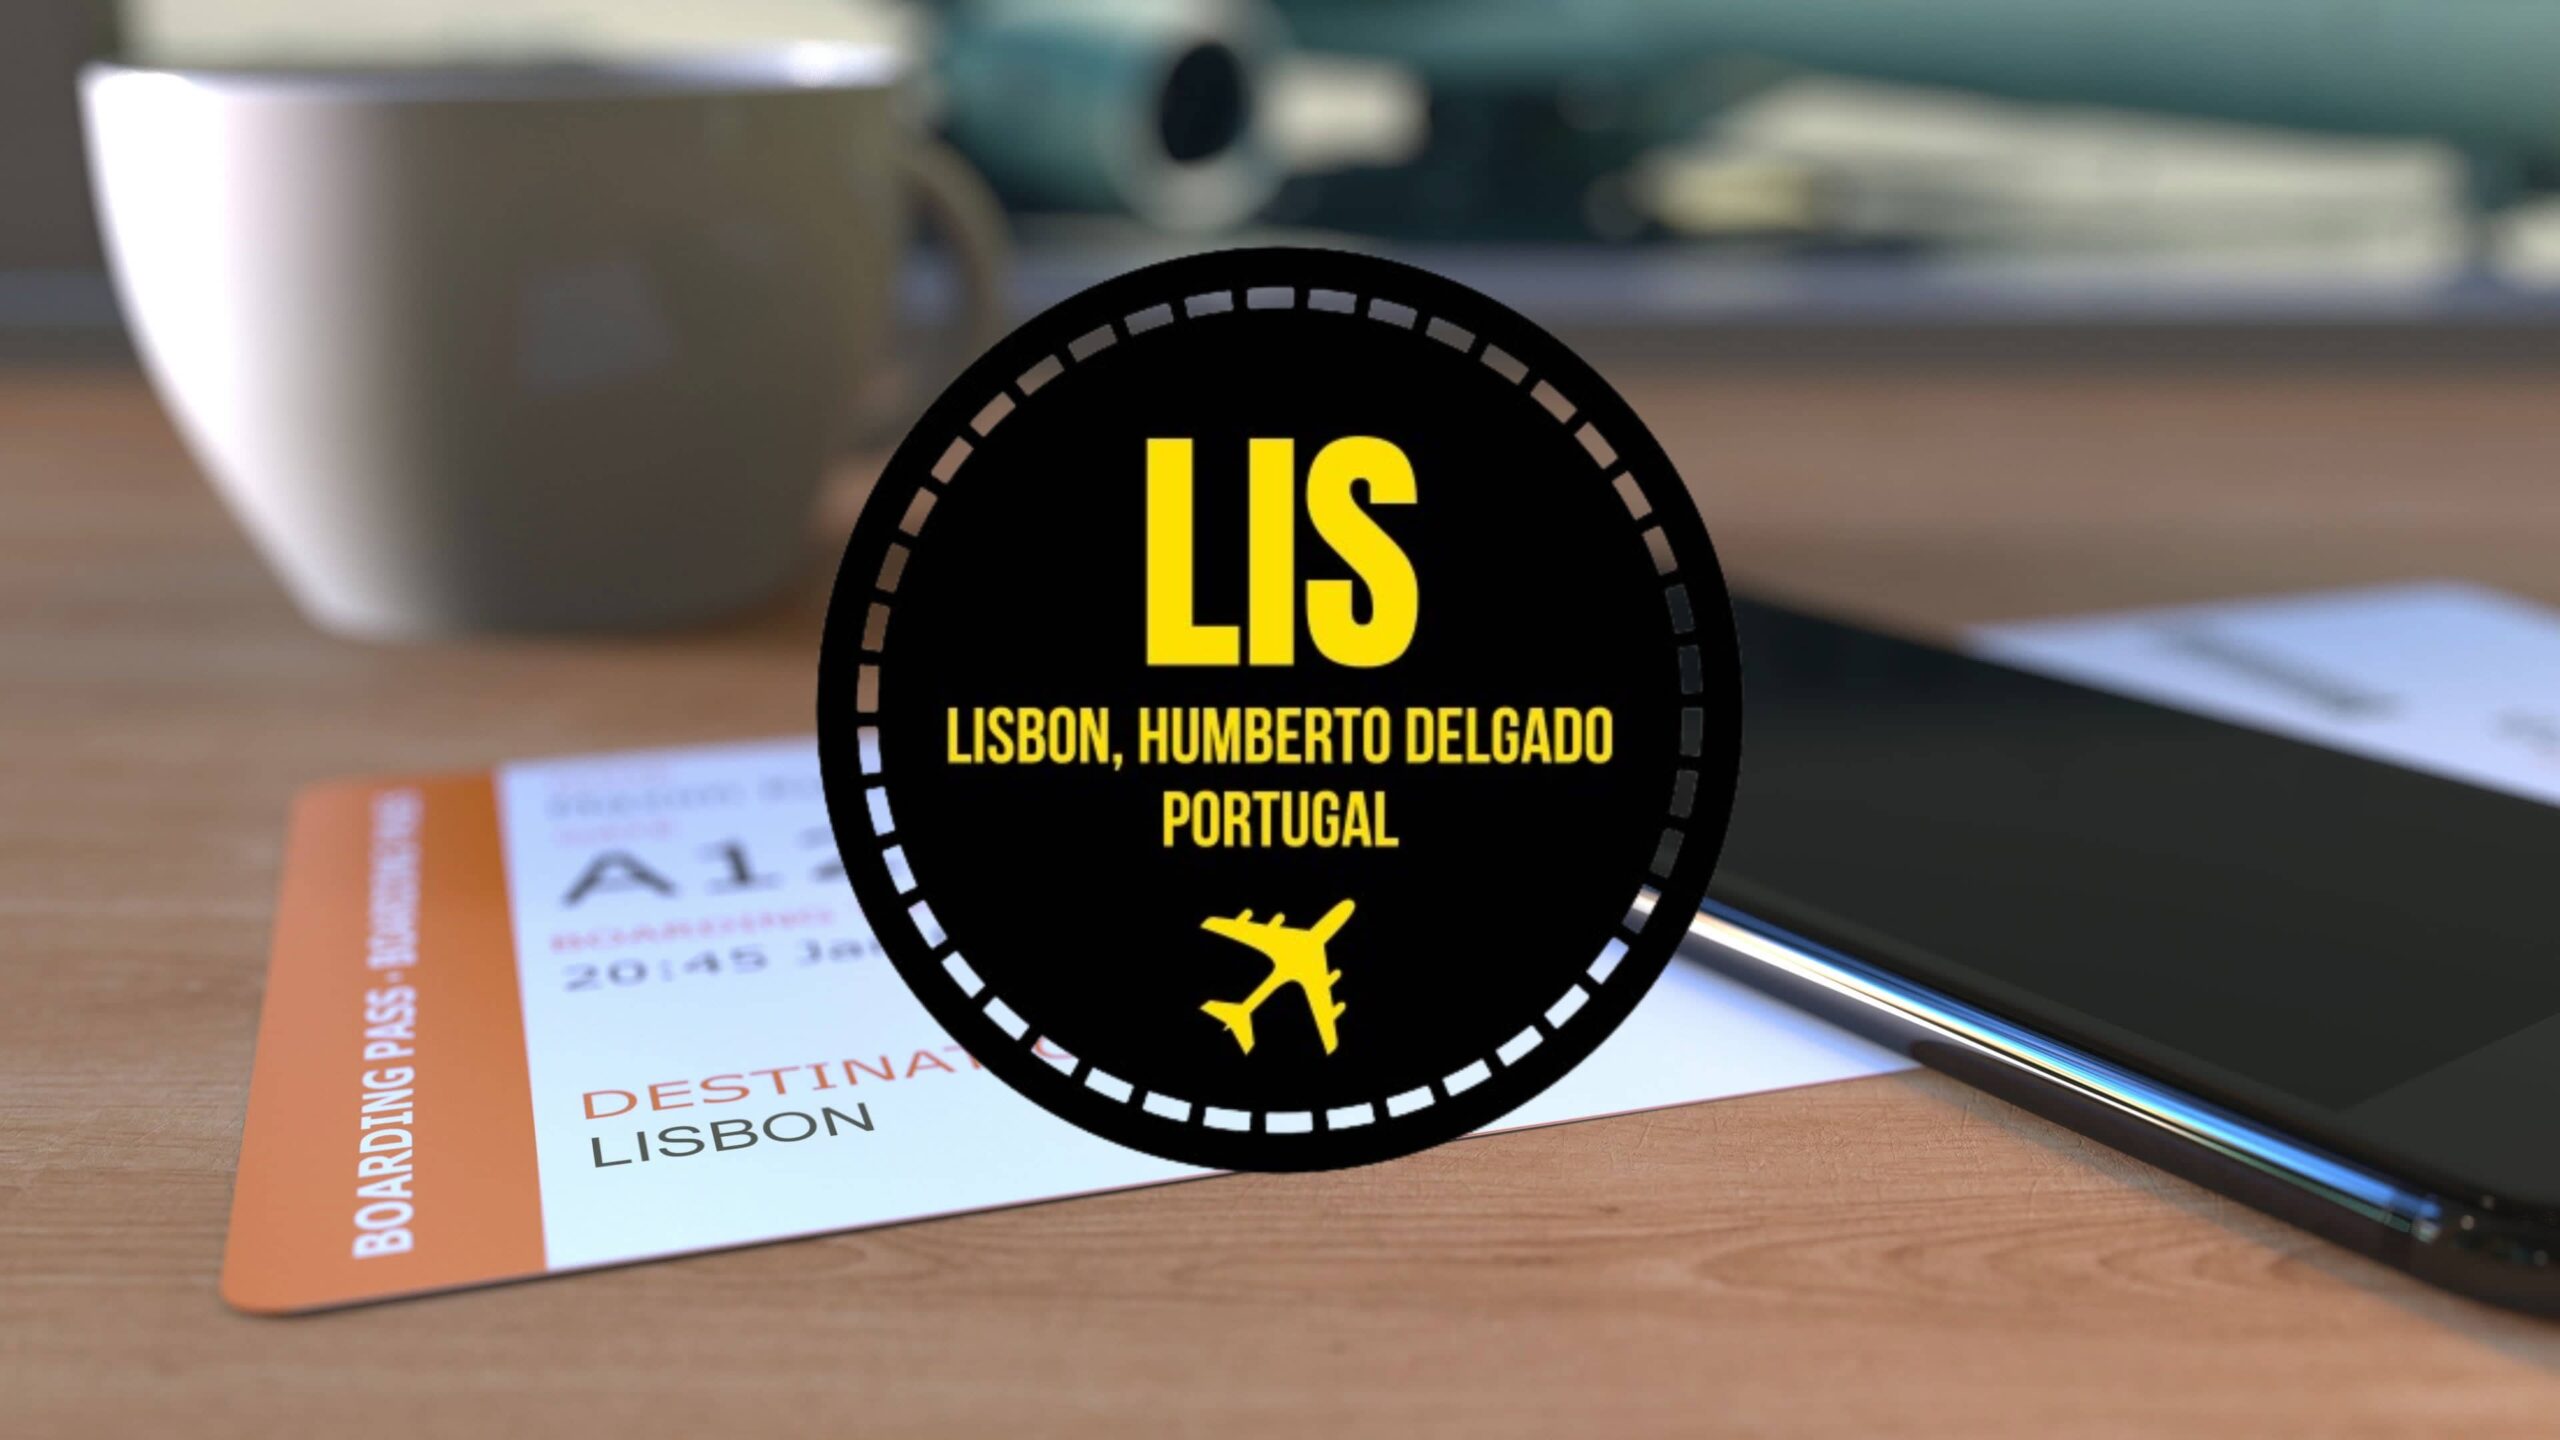 Lisbon Airport Code: LIS